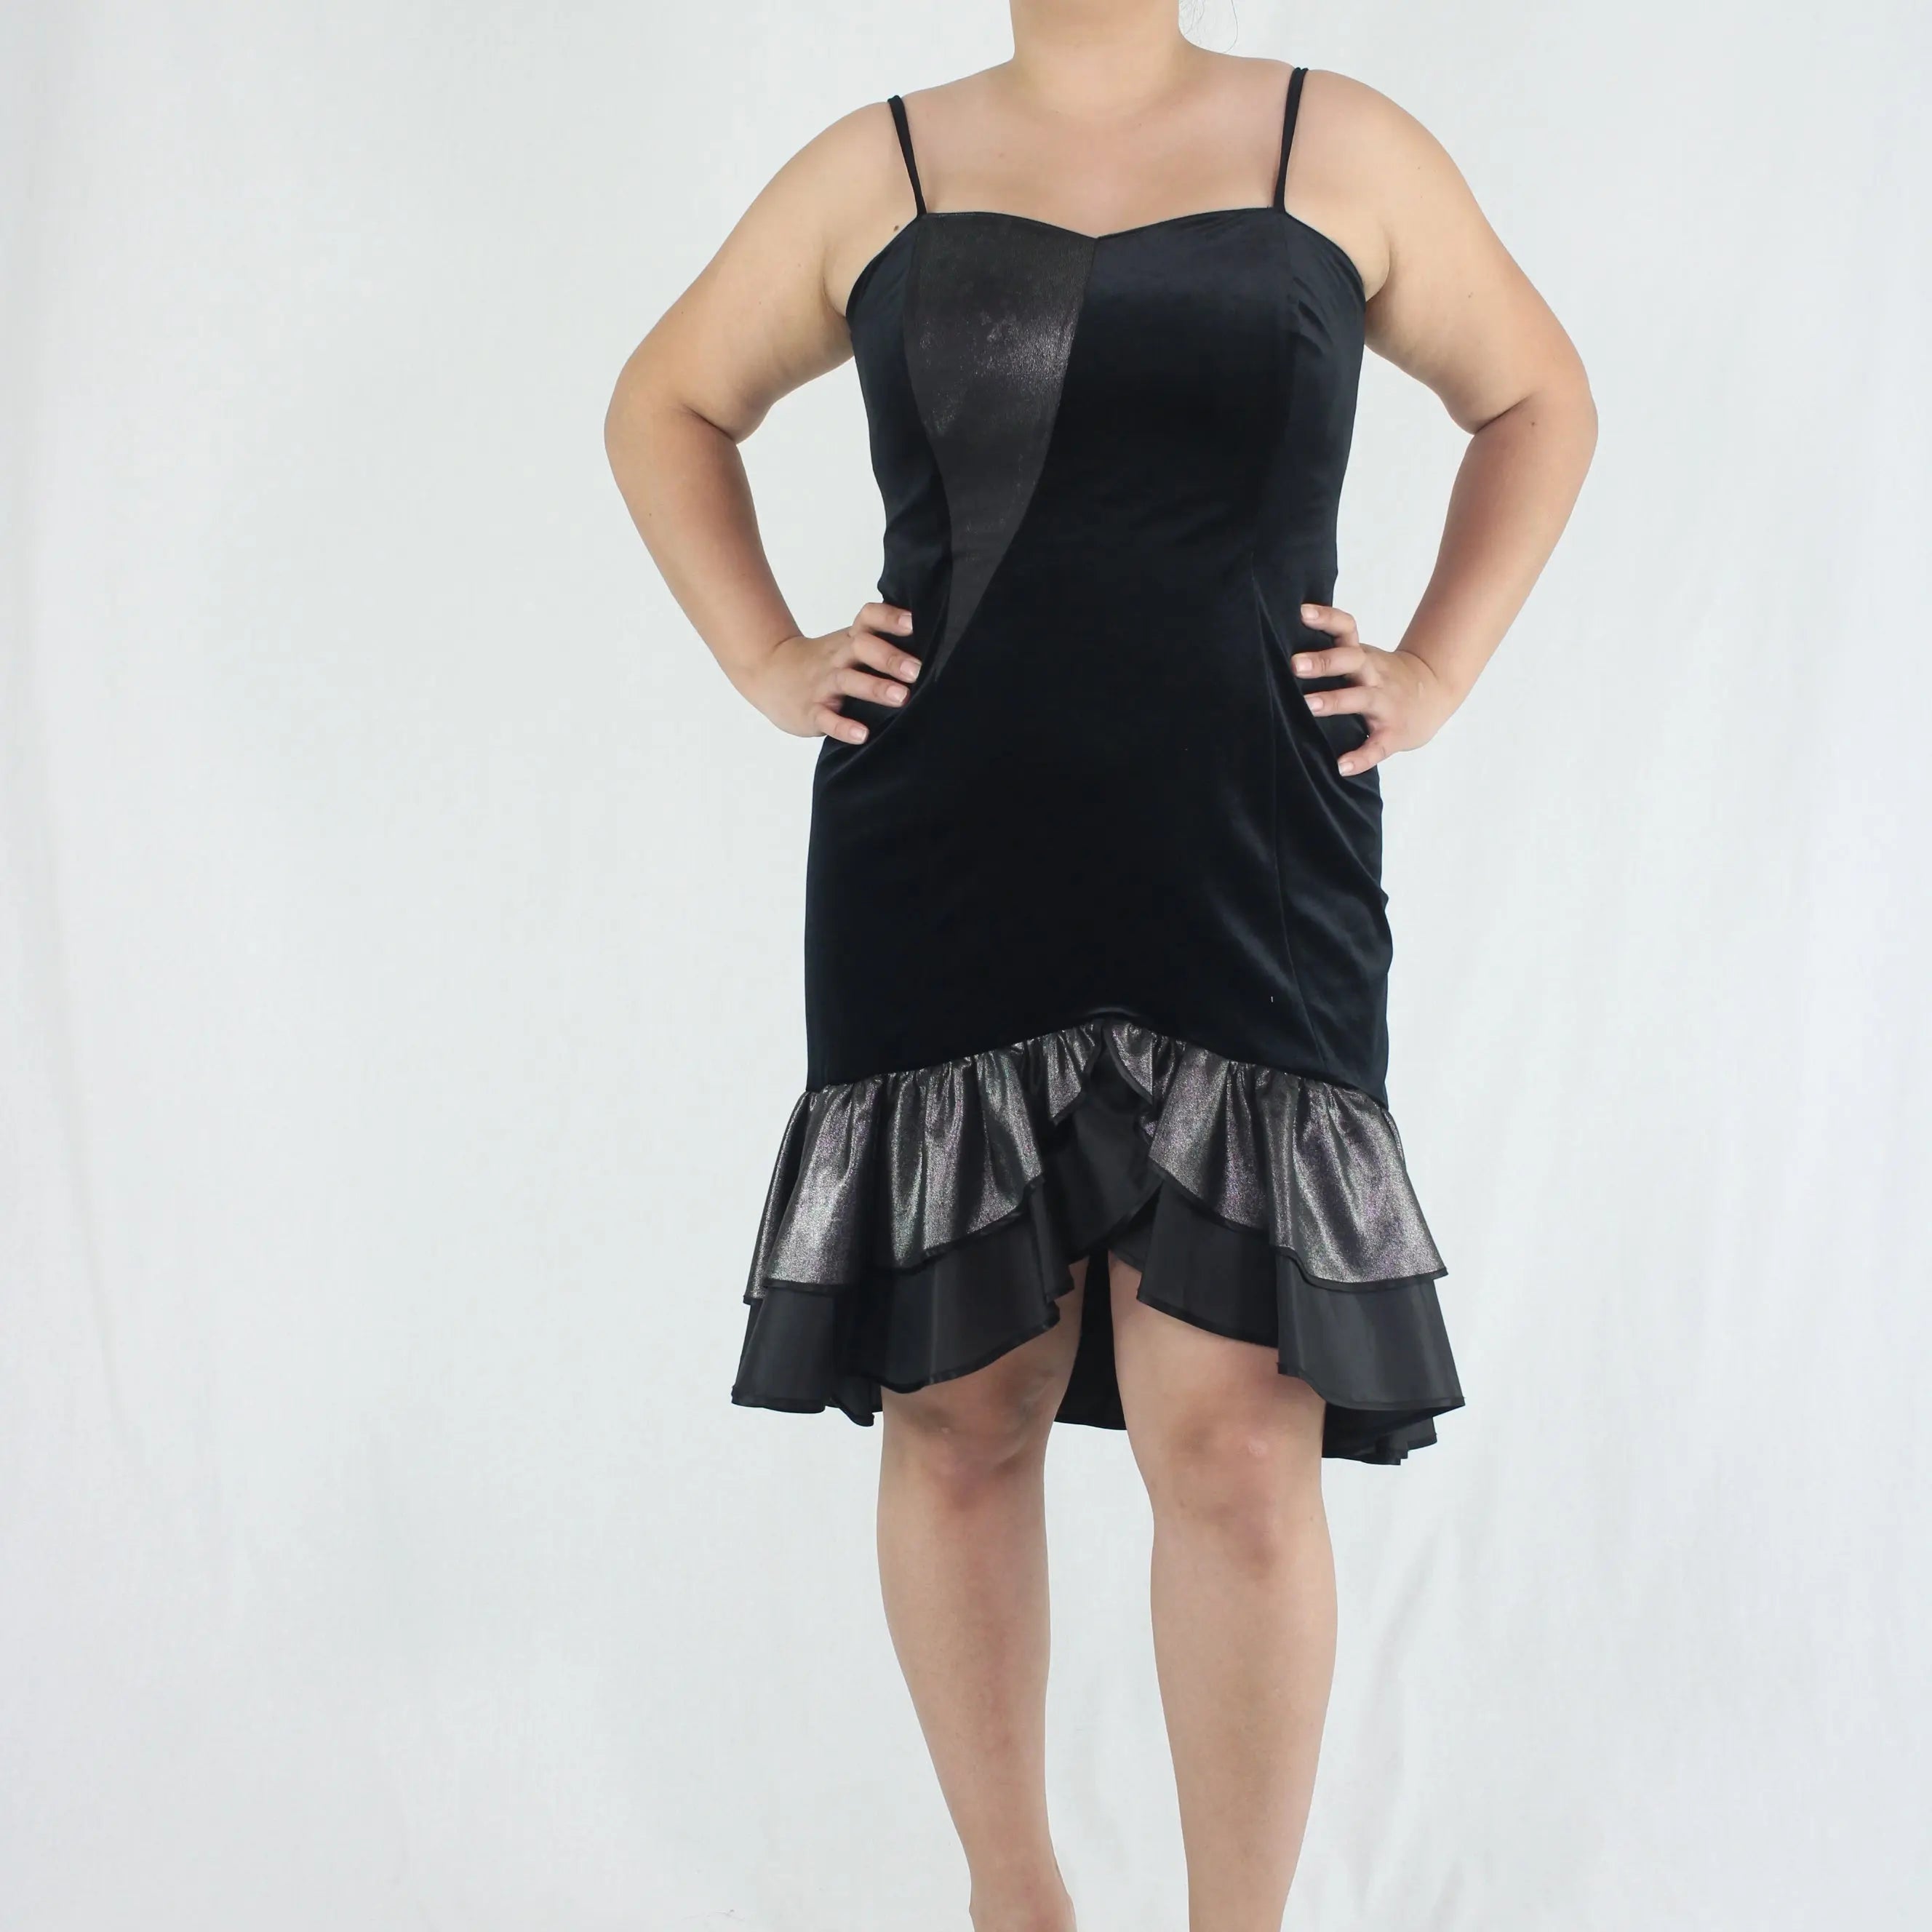 Le Kress - 80s Black Velvet Party Dress- ThriftTale.com - Vintage and second handclothing